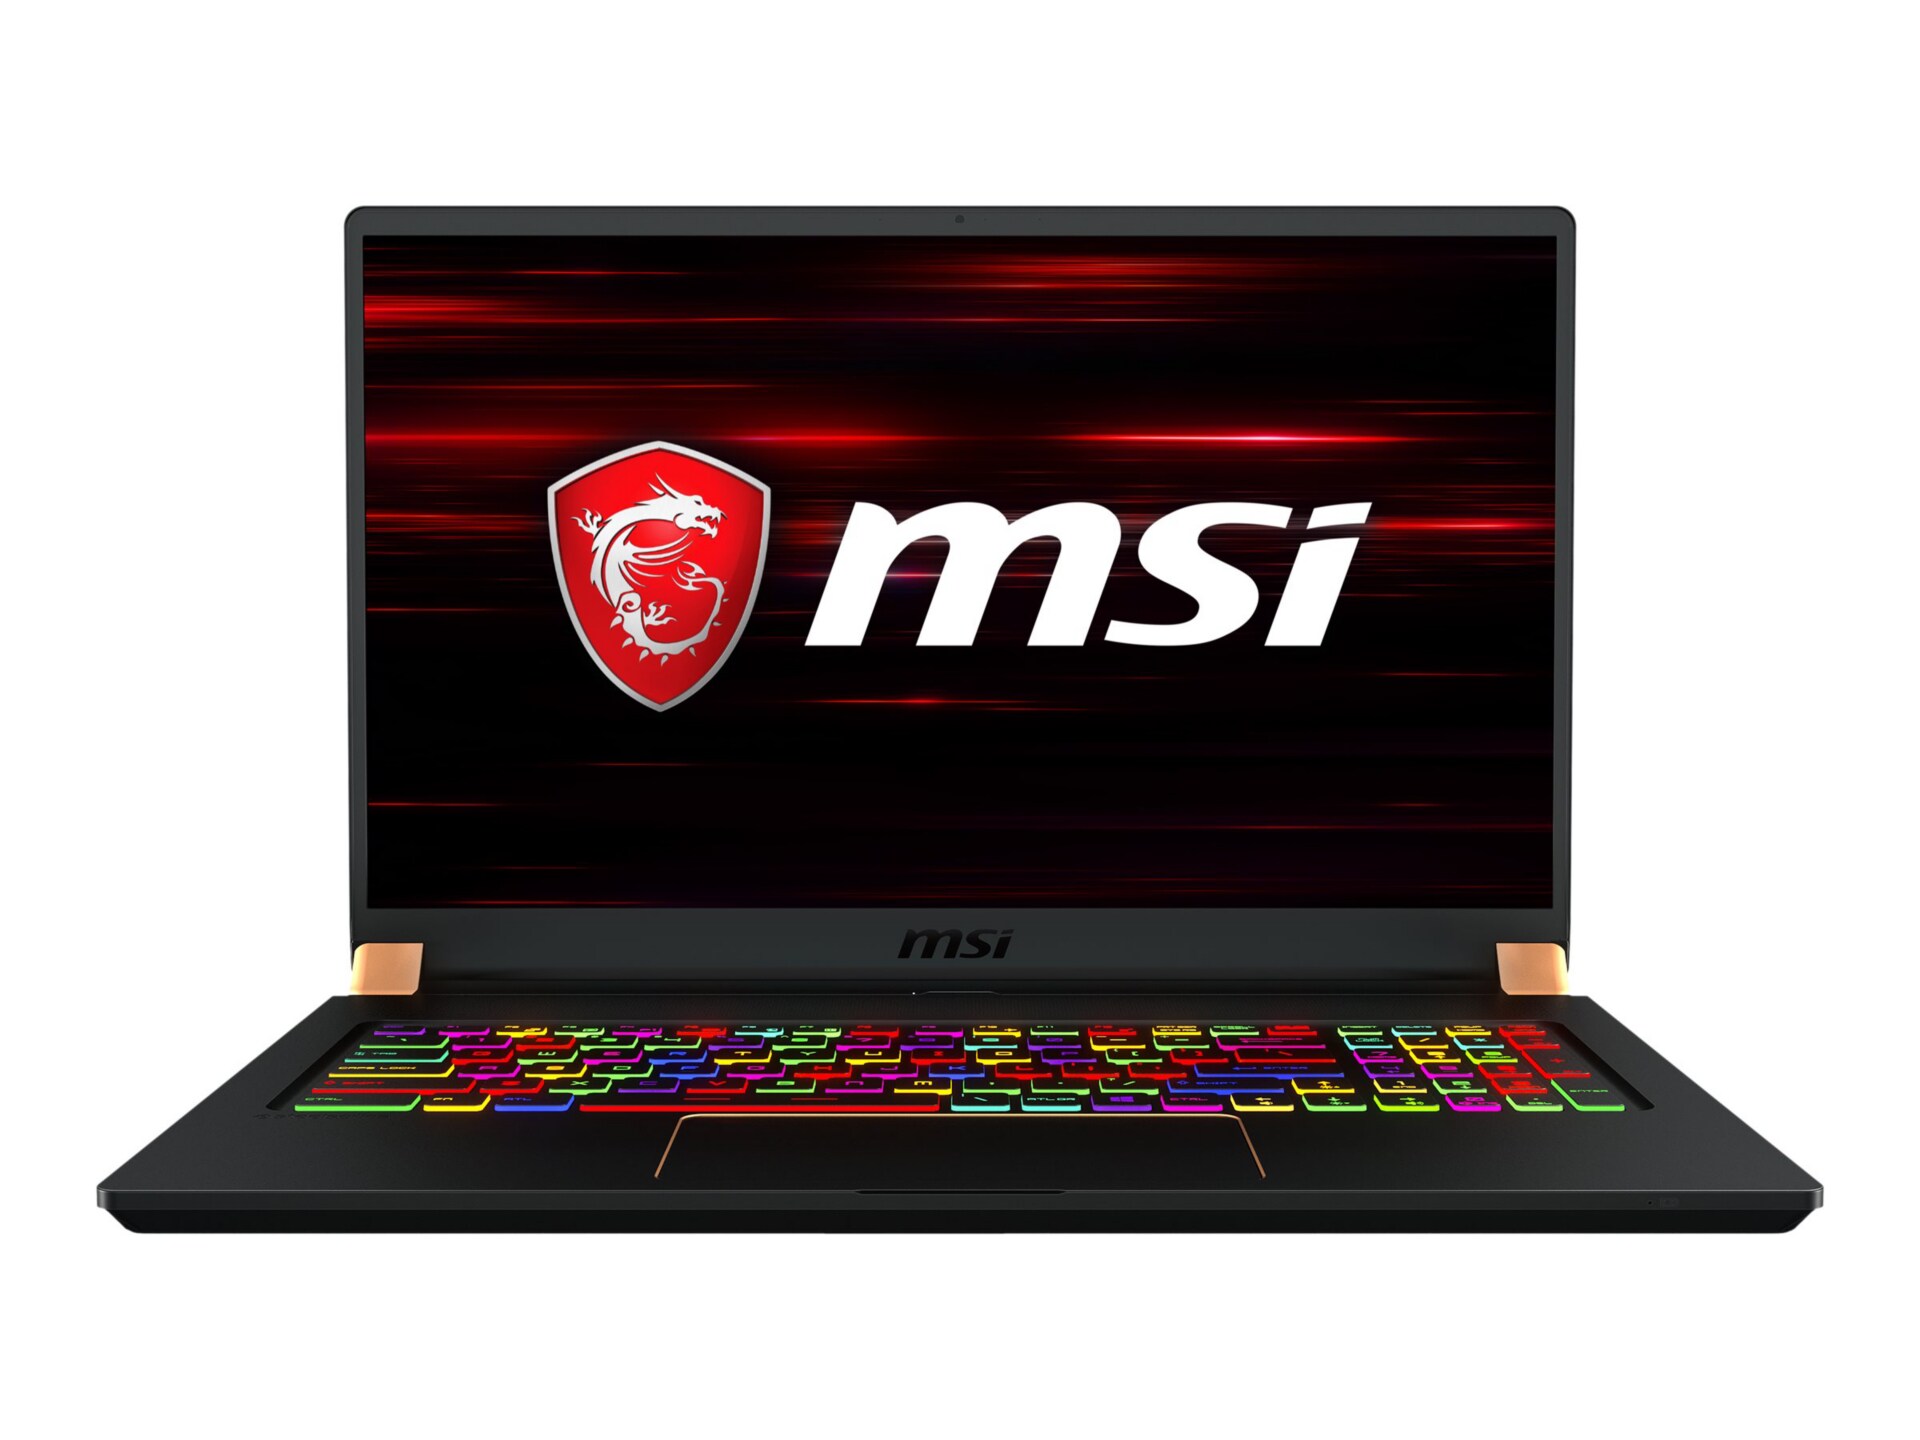 MSI GS75 Stealth-479 - 17.3" - Core i9 9880H - 32 GB RAM - 1 TB SSD